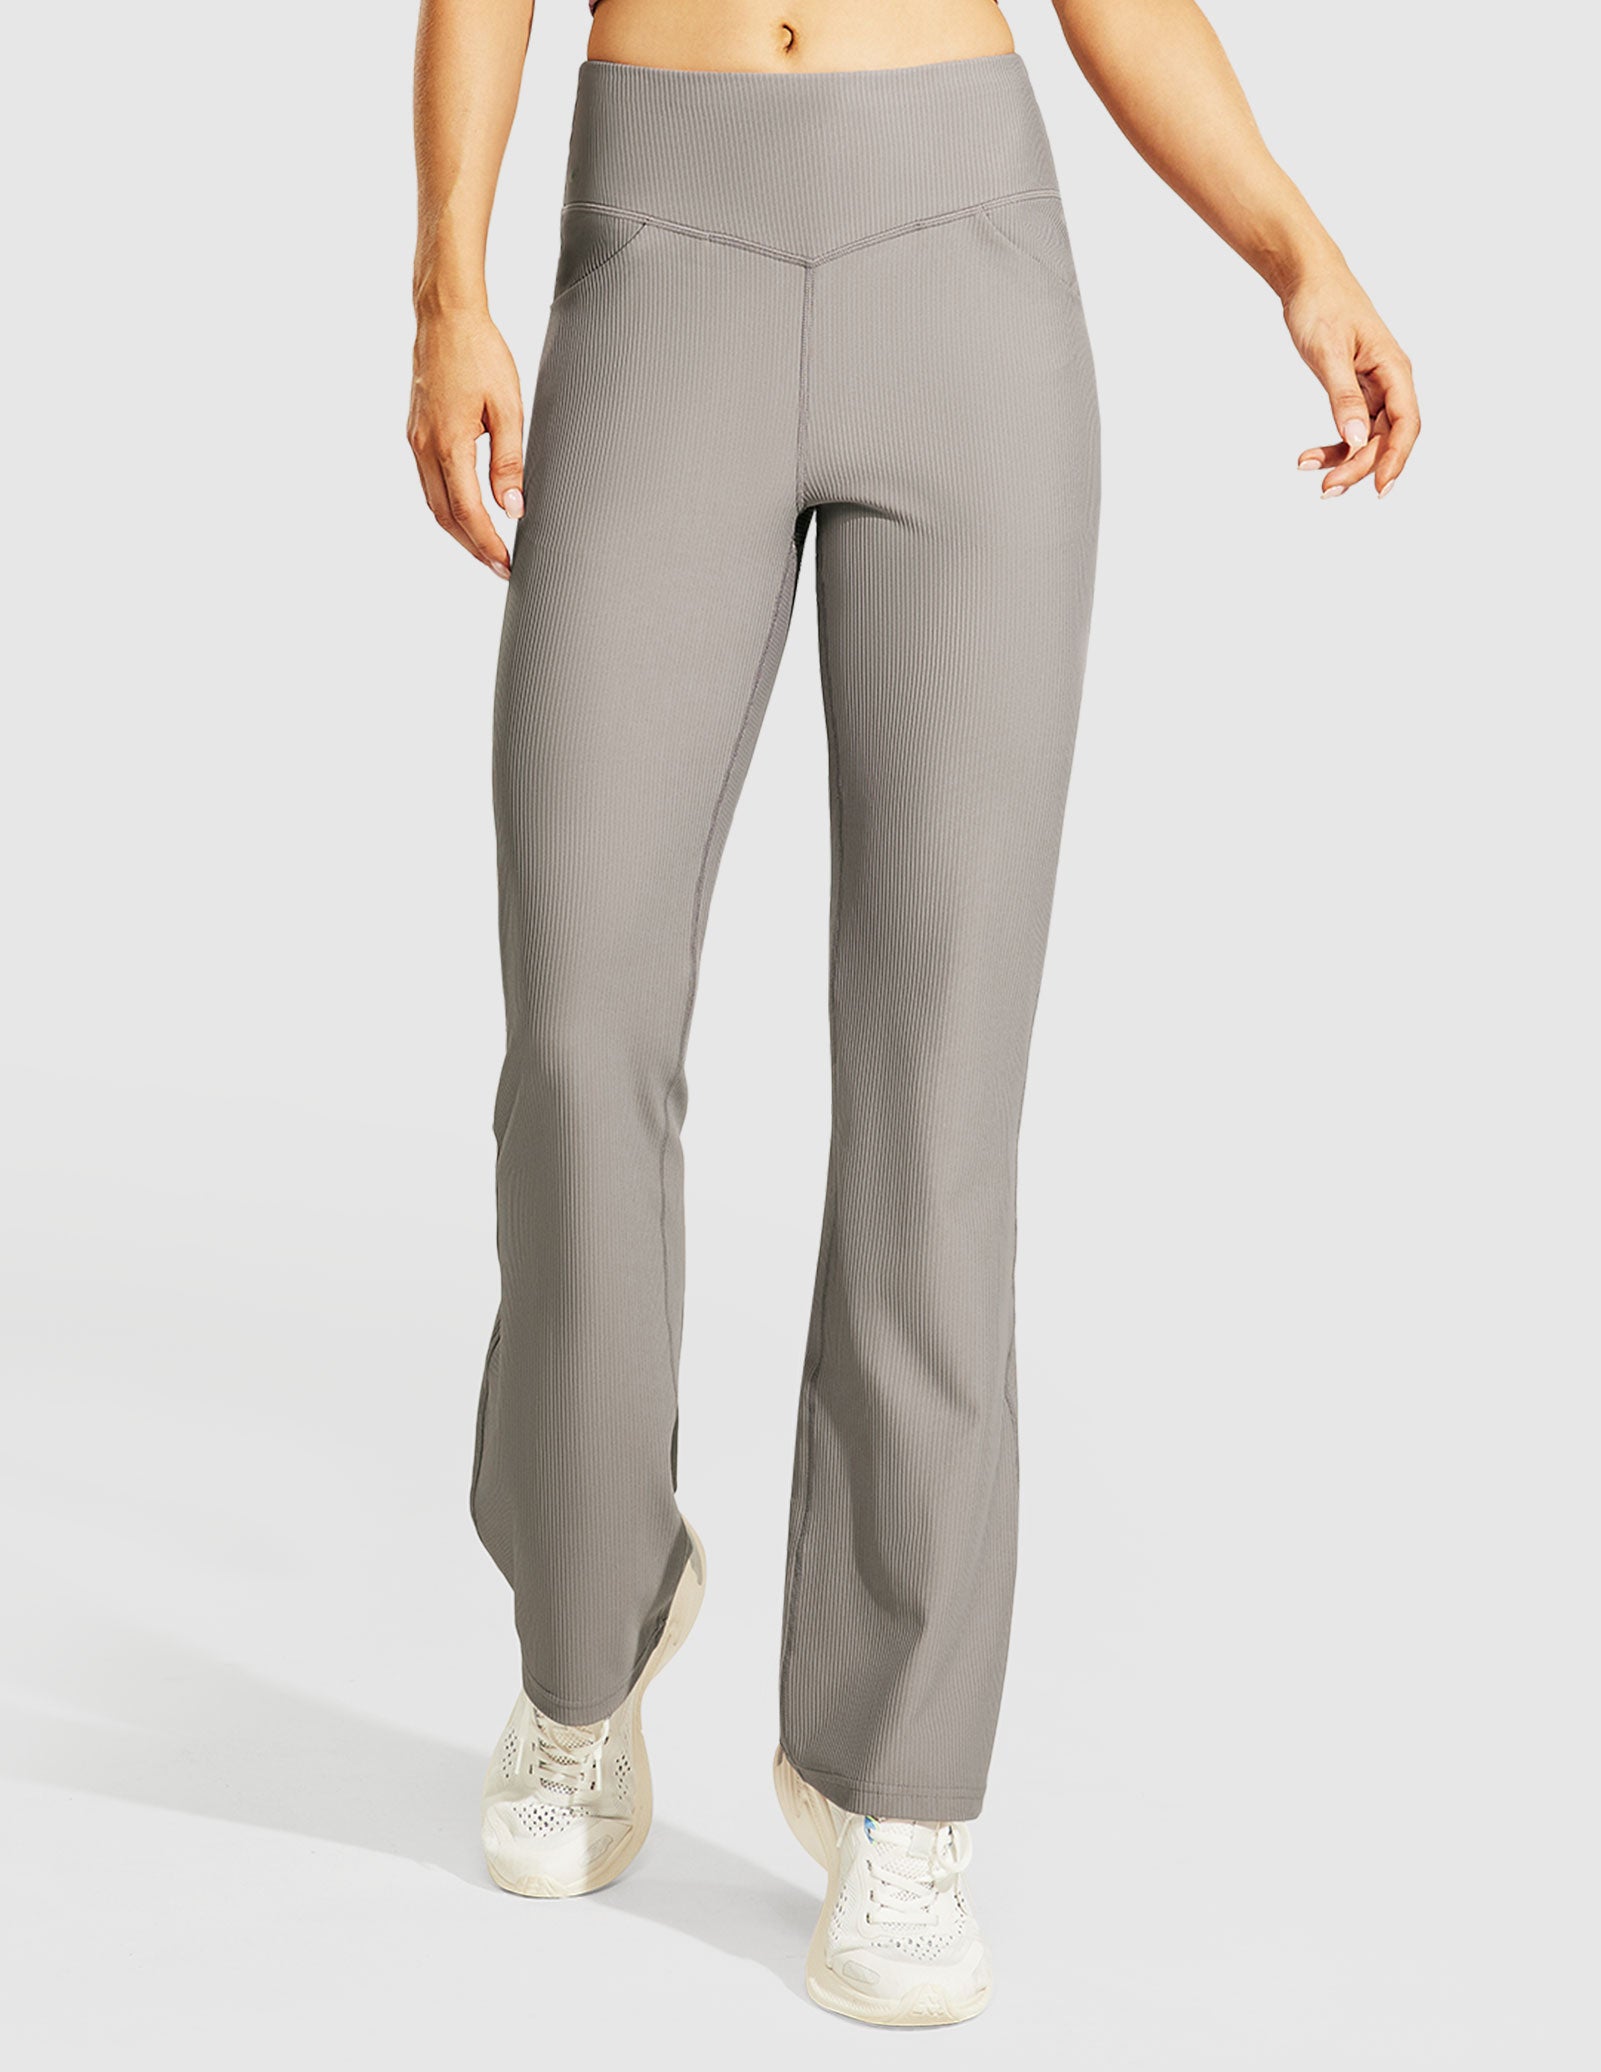 STELLE Women Bootcut Yoga Pants with Pockets High Waisted Bootleg Workout  Pants Flare Work Pants 30ââ‚¬â„¢ââ‚¬â„¢ (Black, Medium) : Amazon.in:  Clothing & Accessories